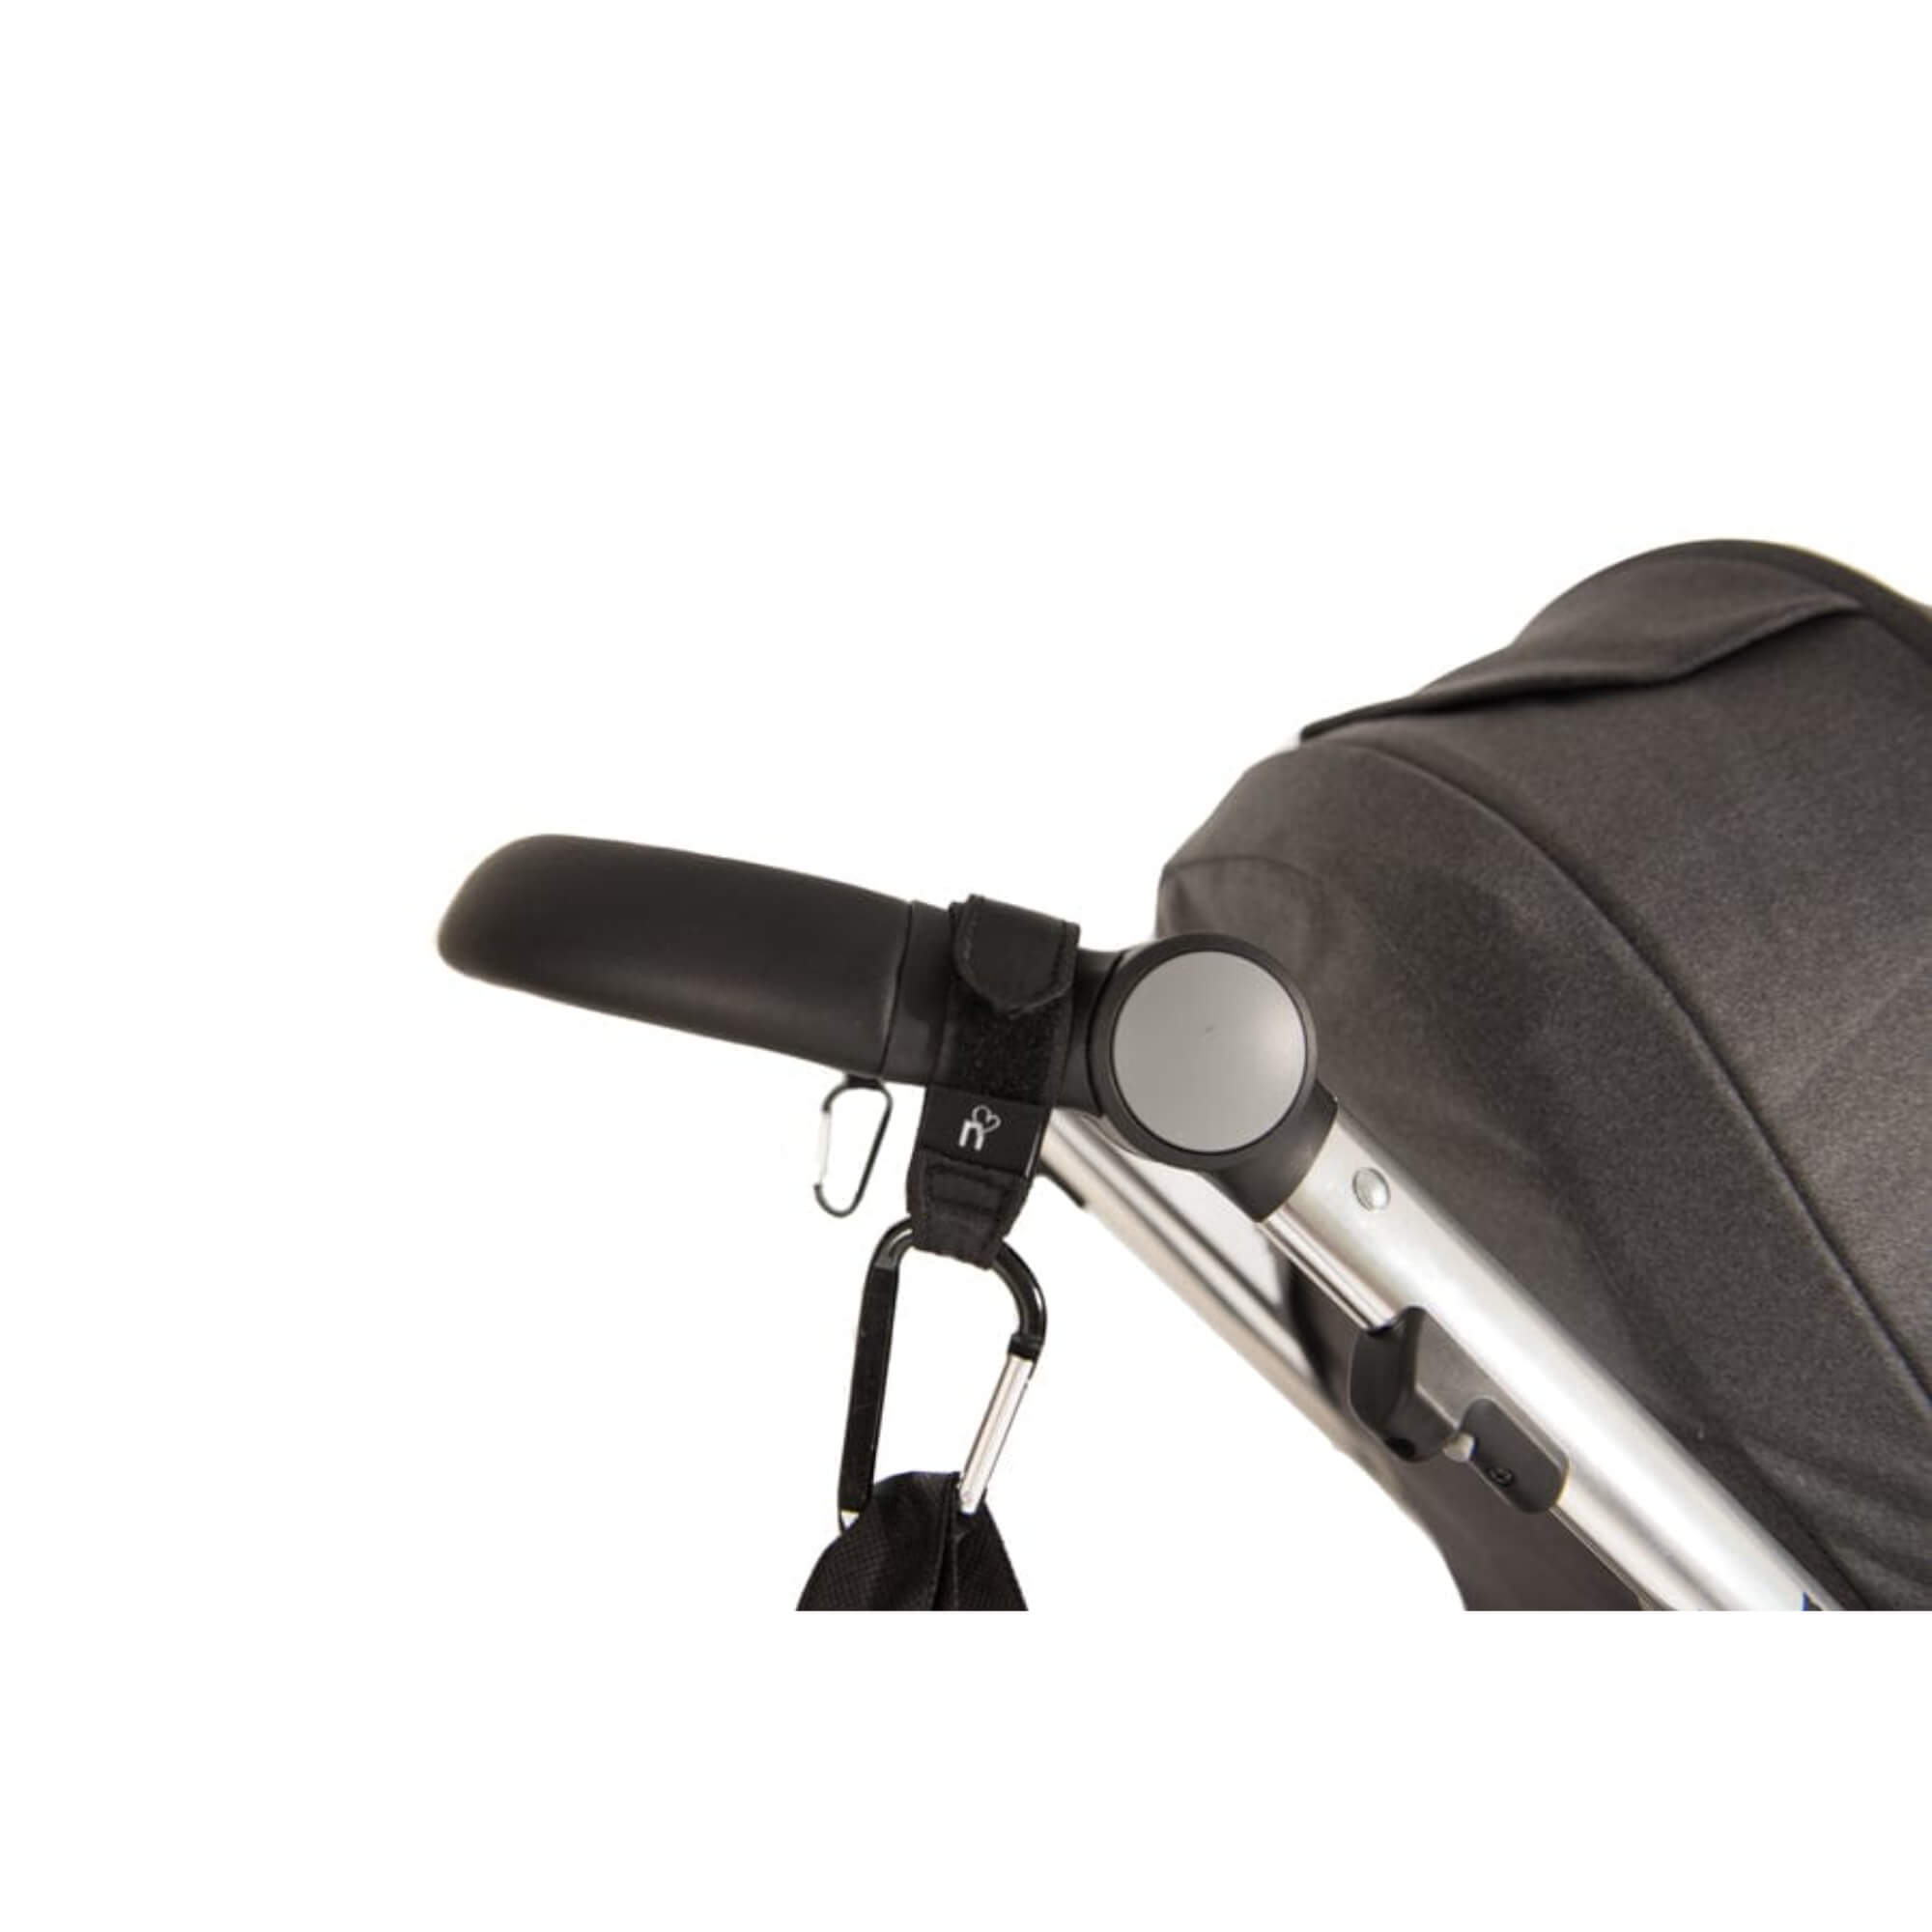 noola strollerbuddy multi purpose hooks set of 2 baby stroller accessories